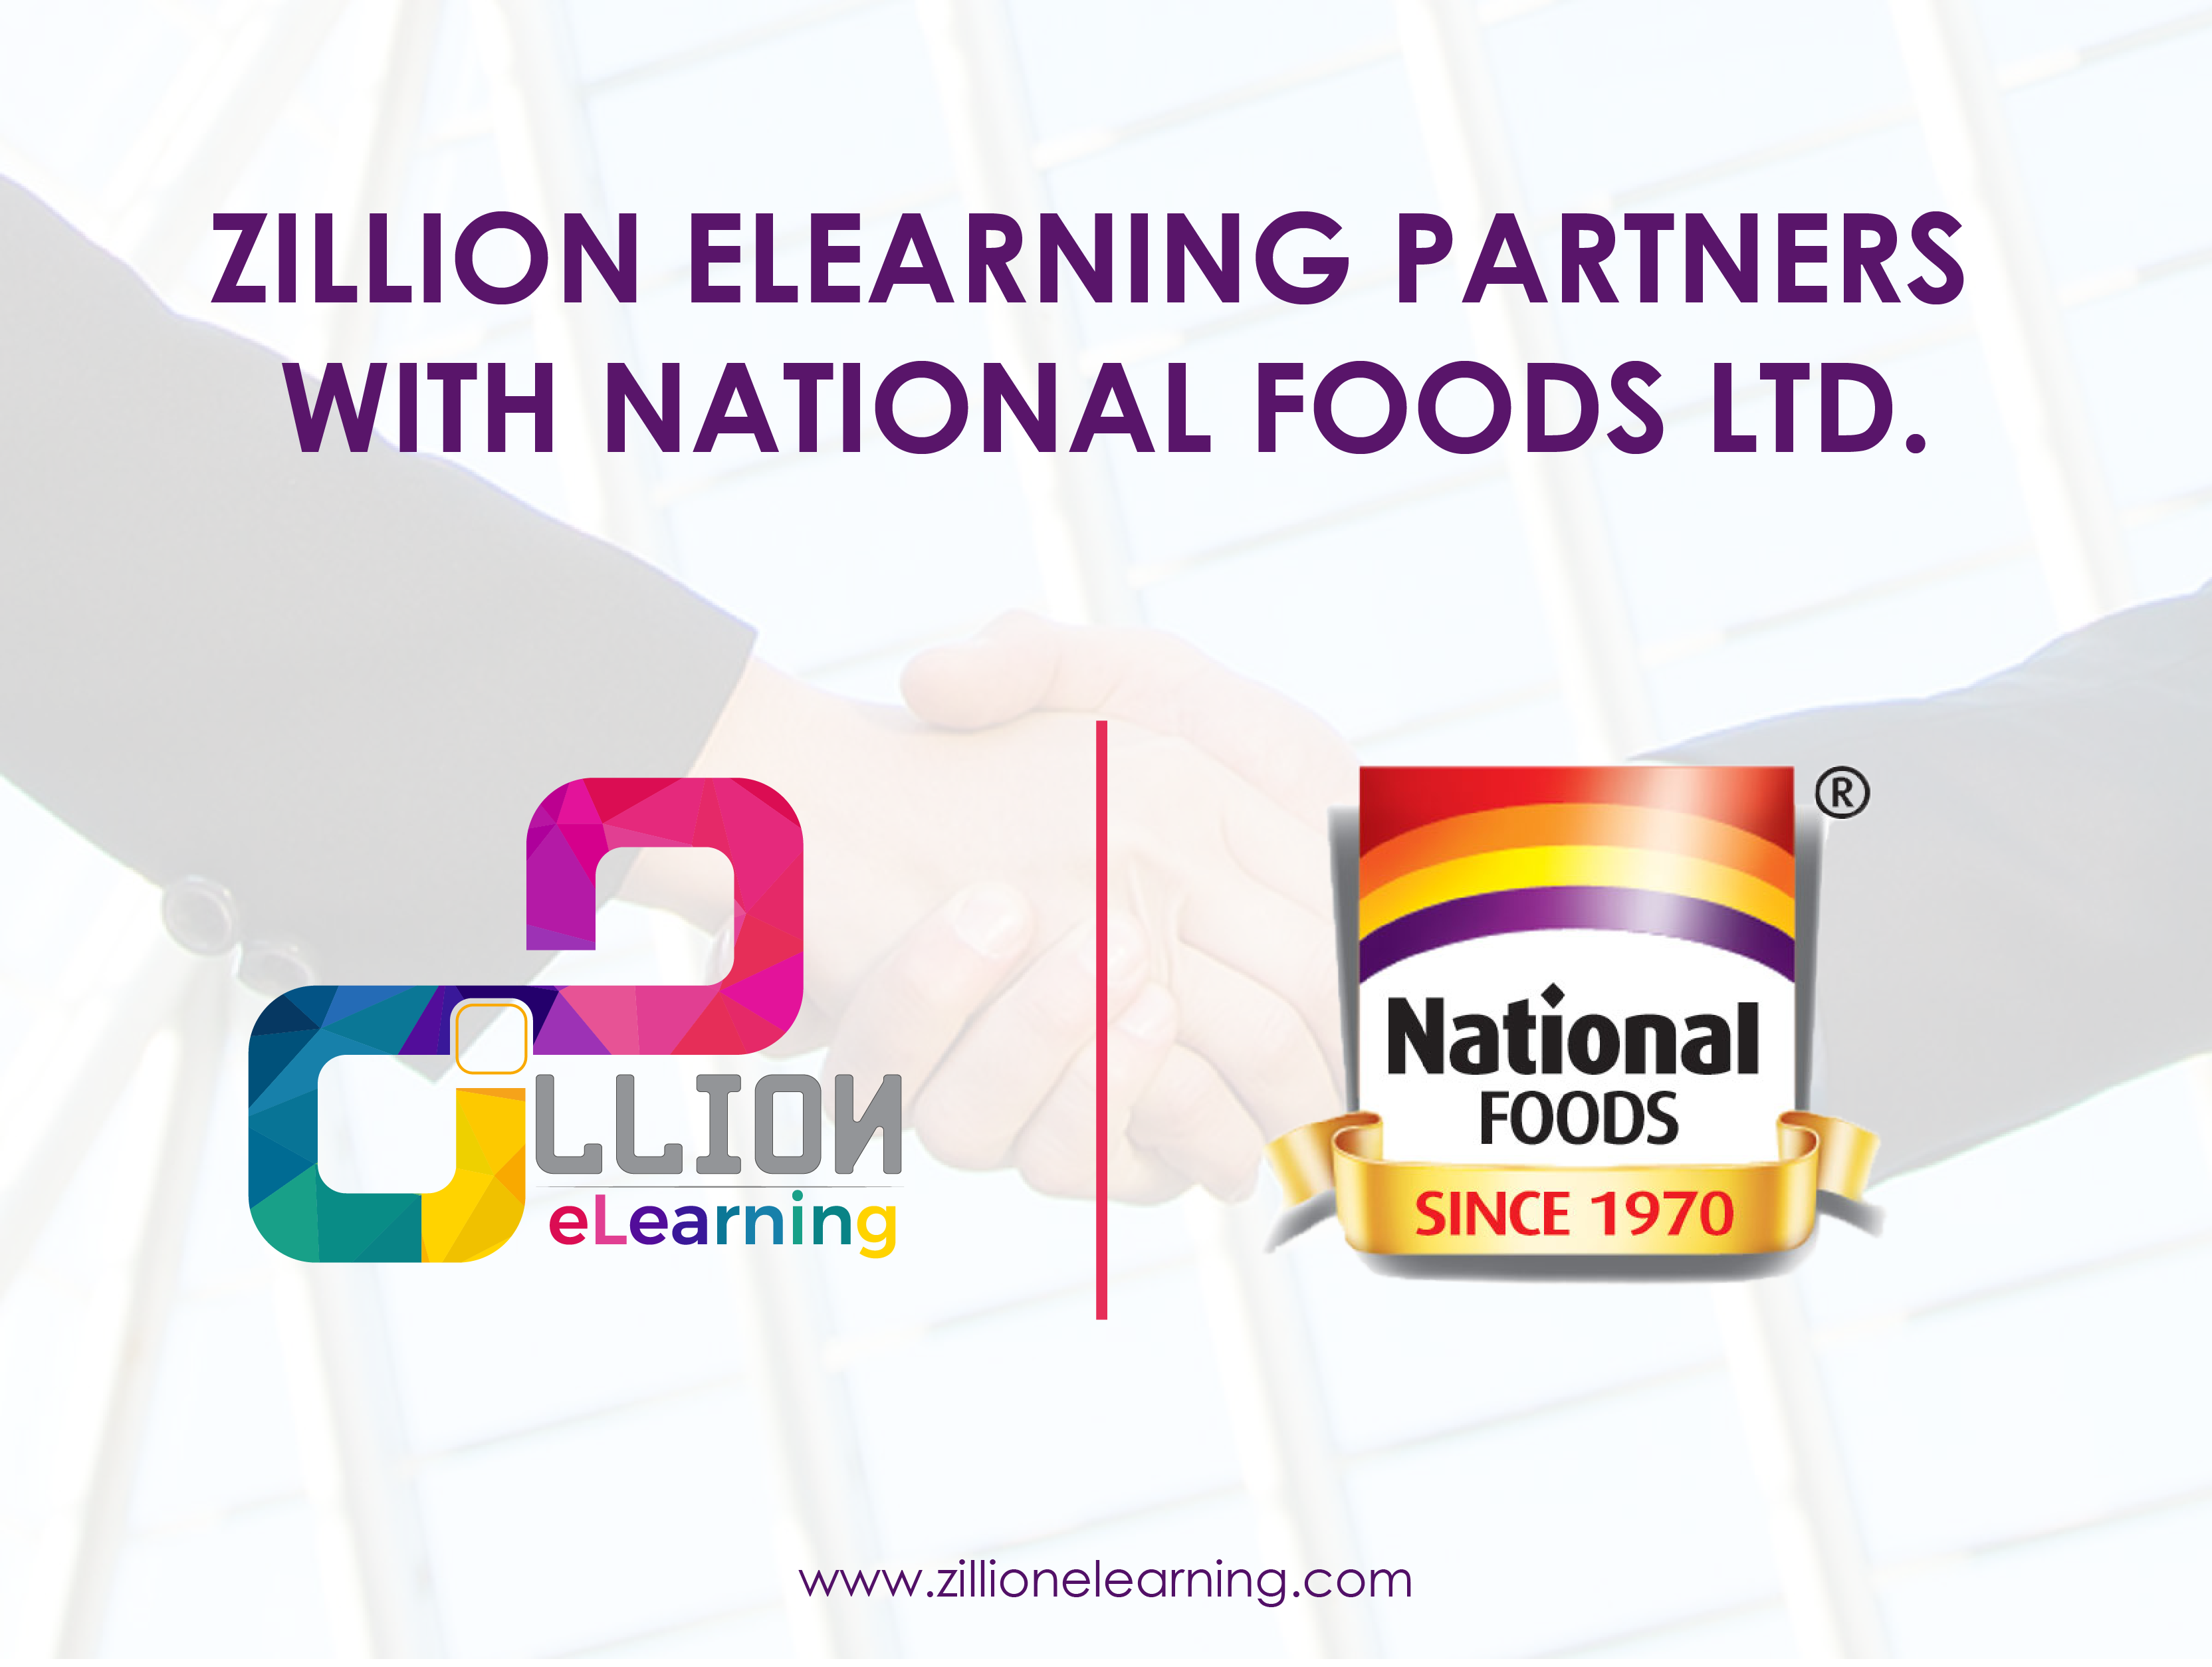 Zillion eLearning and National Foods ltd. Announces Strategic Partnership